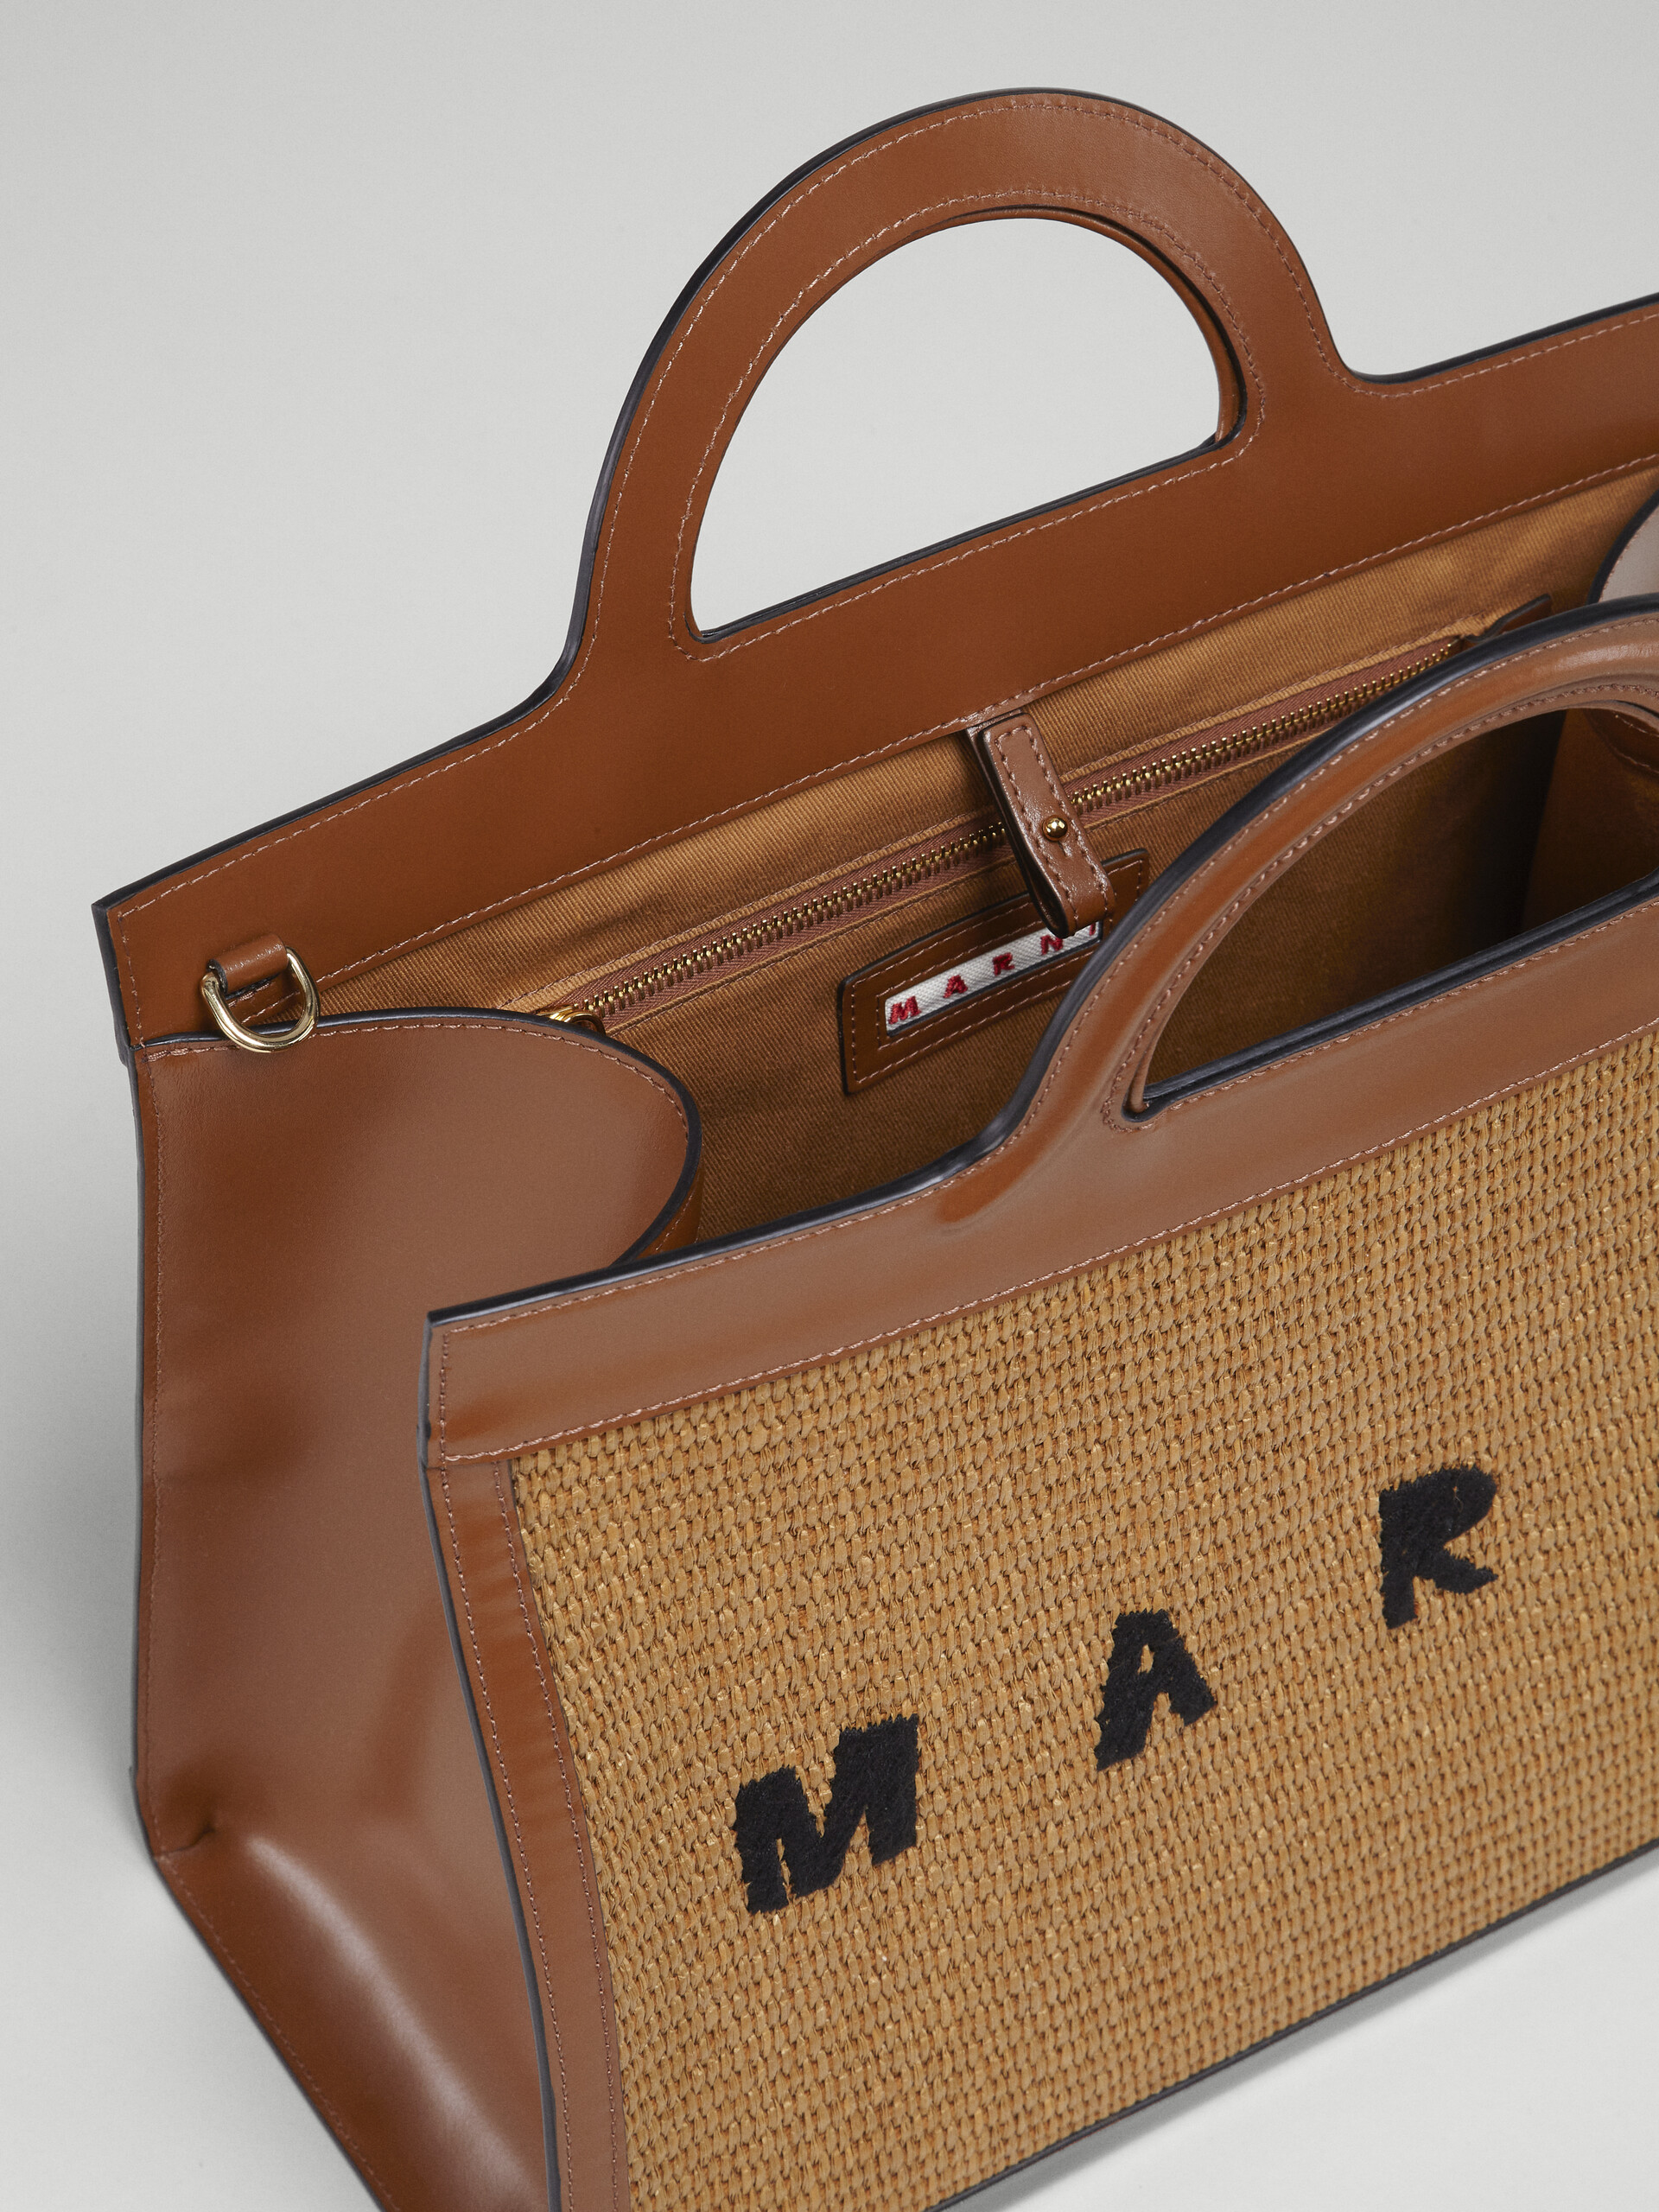 TROPICALIA tote bag in brown leather and raffia - Handbags - Image 5